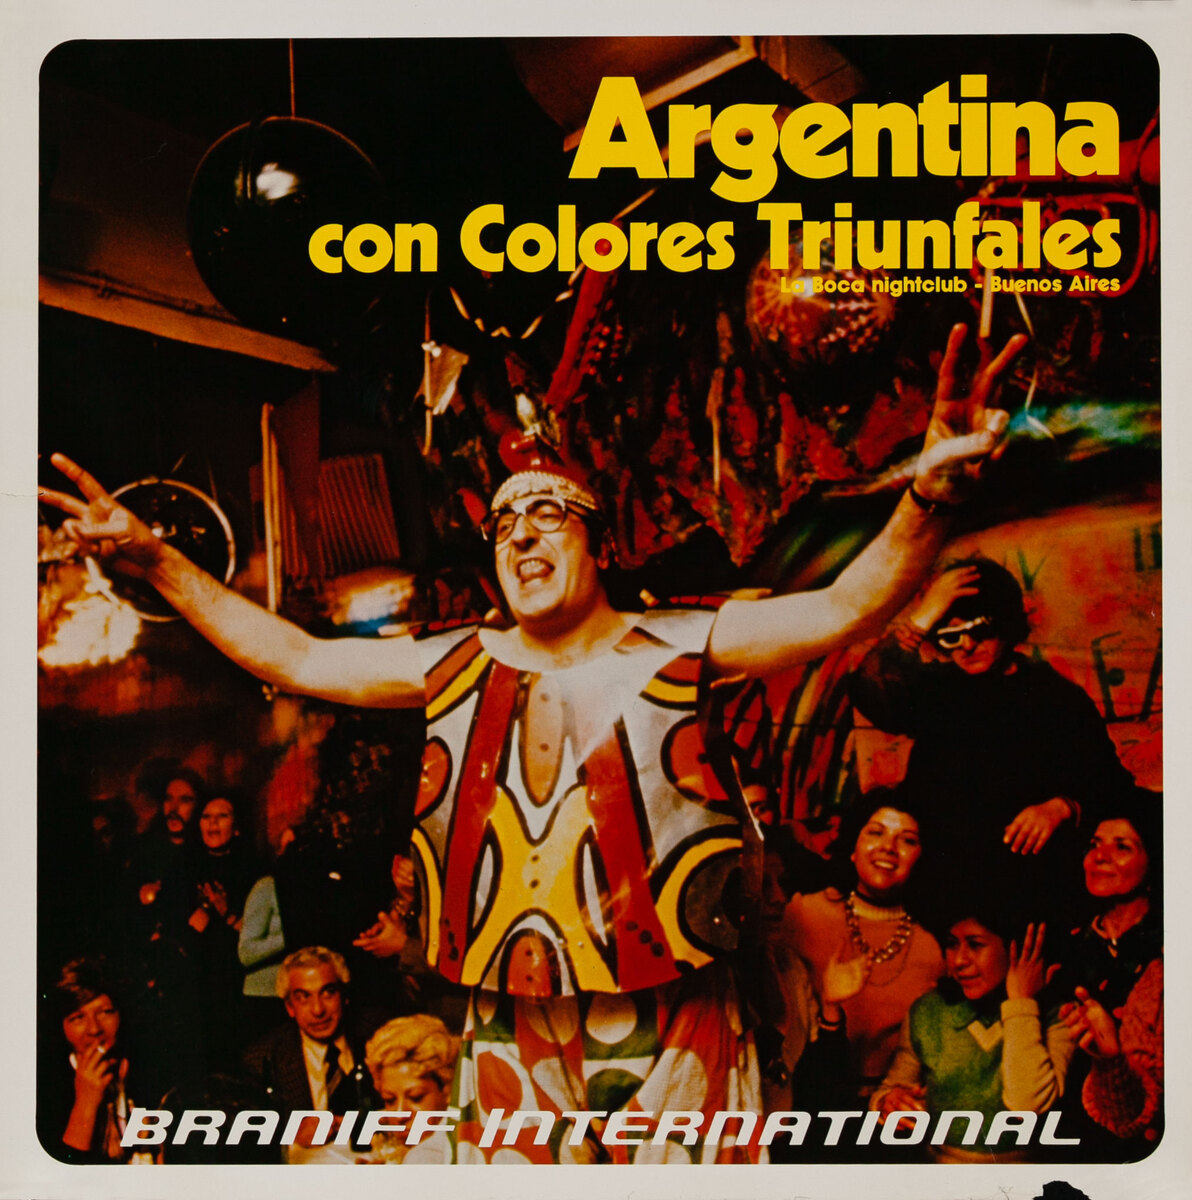 Argentina Braniff International Con Colores Triunfales la Boca nightclub